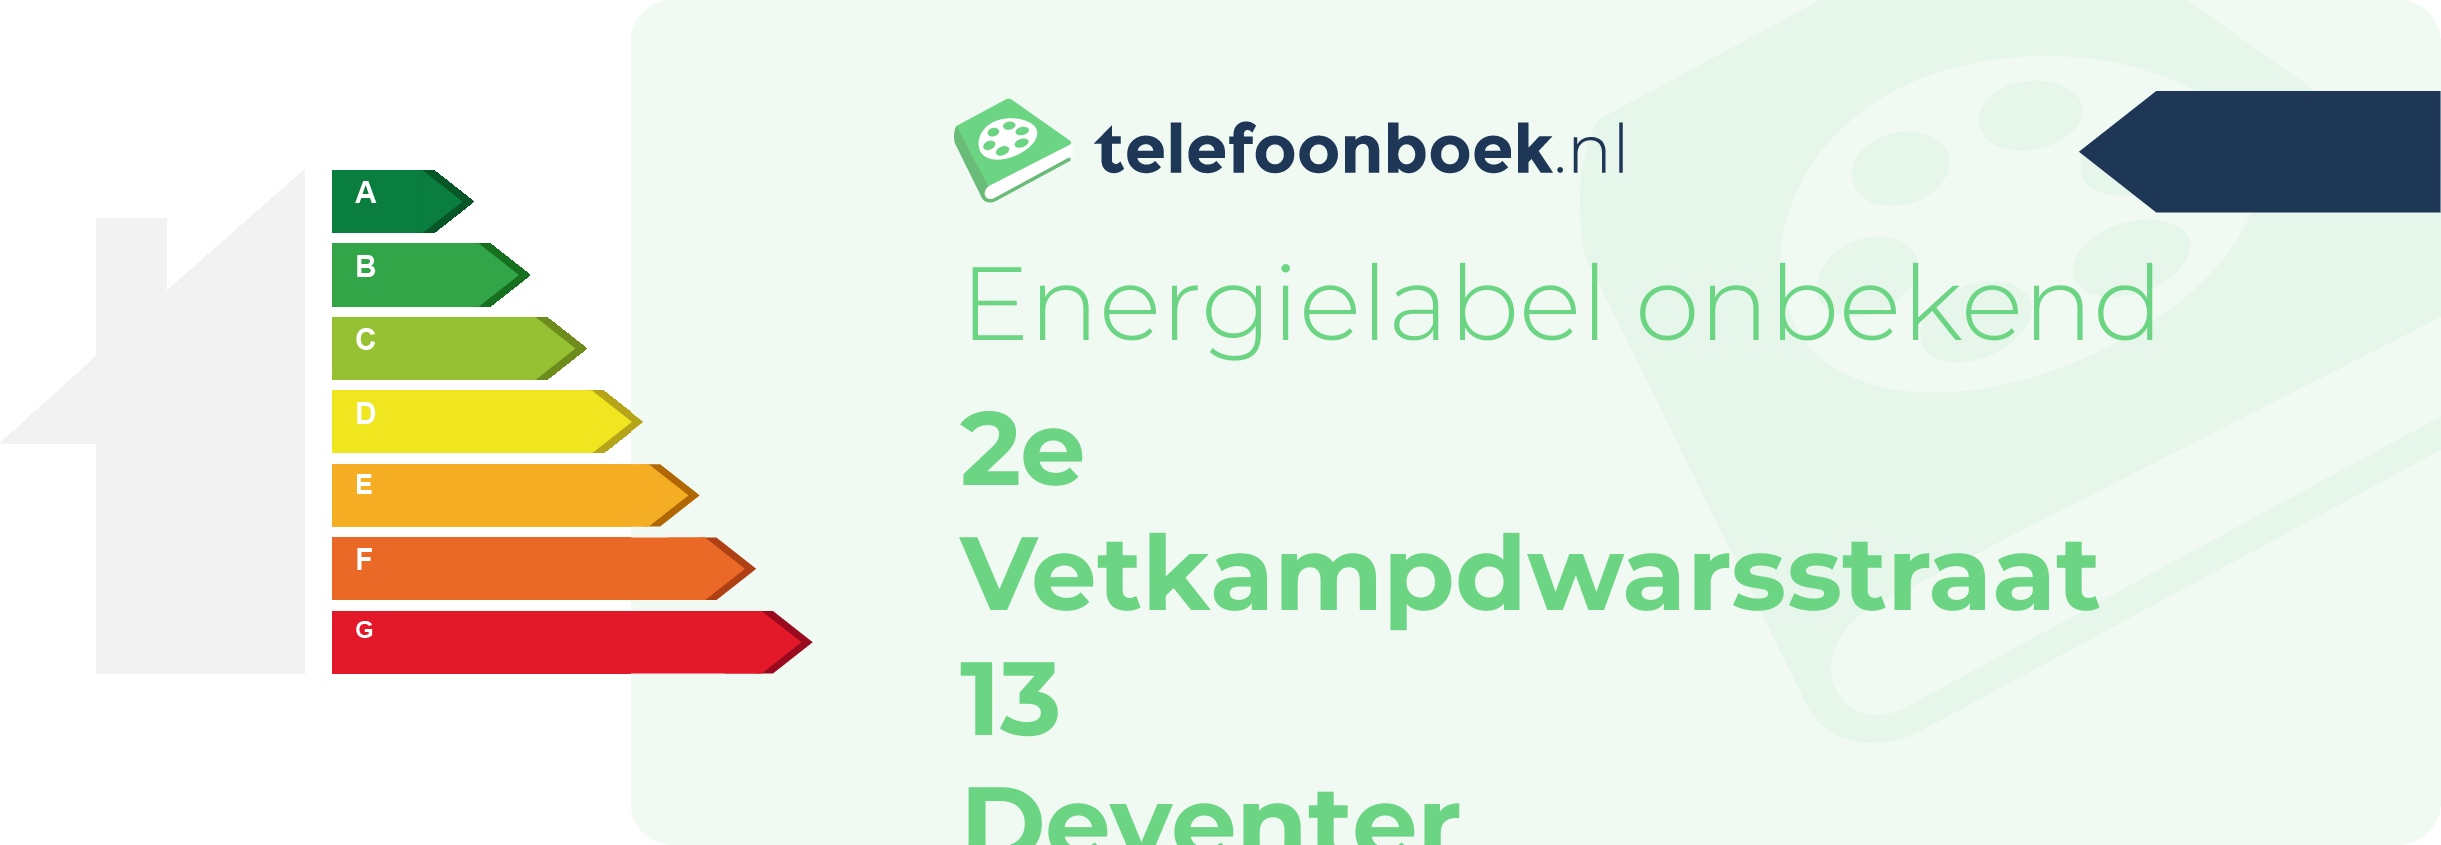 Energielabel 2e Vetkampdwarsstraat 13 Deventer